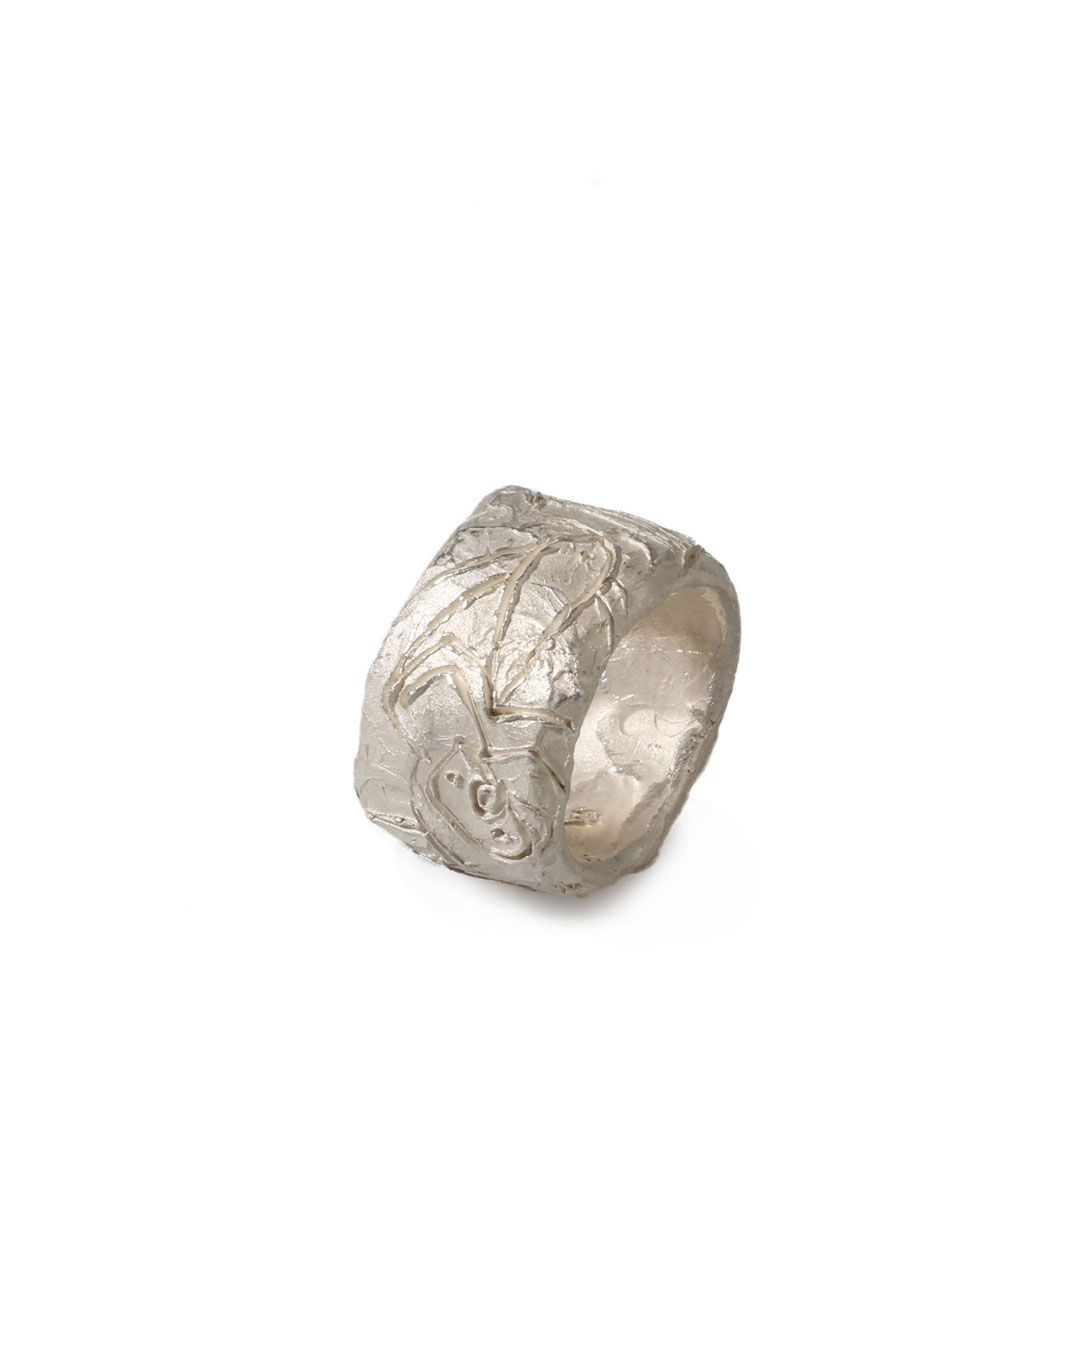 Juliane Brandes, zonder titel, 2014, ring; zilver, 24 x 15 mm, €730